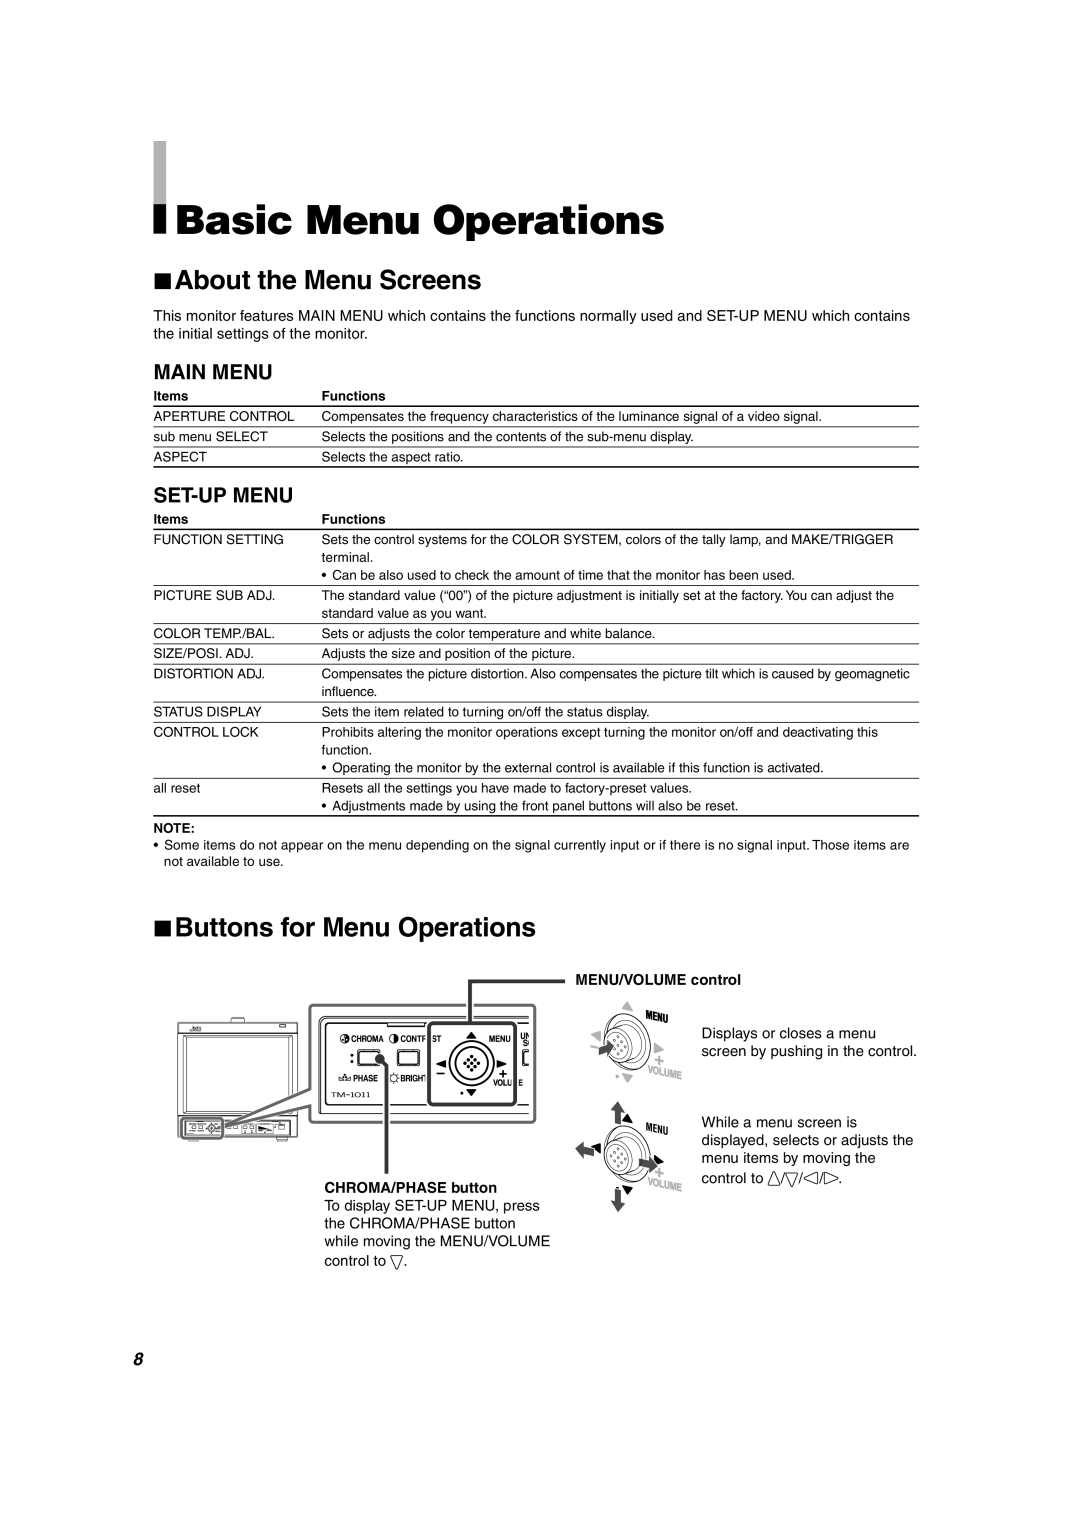 JVC TM-1011G manual Basic Menu Operations, About the Menu Screens, Buttons for Menu Operations, Main Menu, Set-Up Menu 